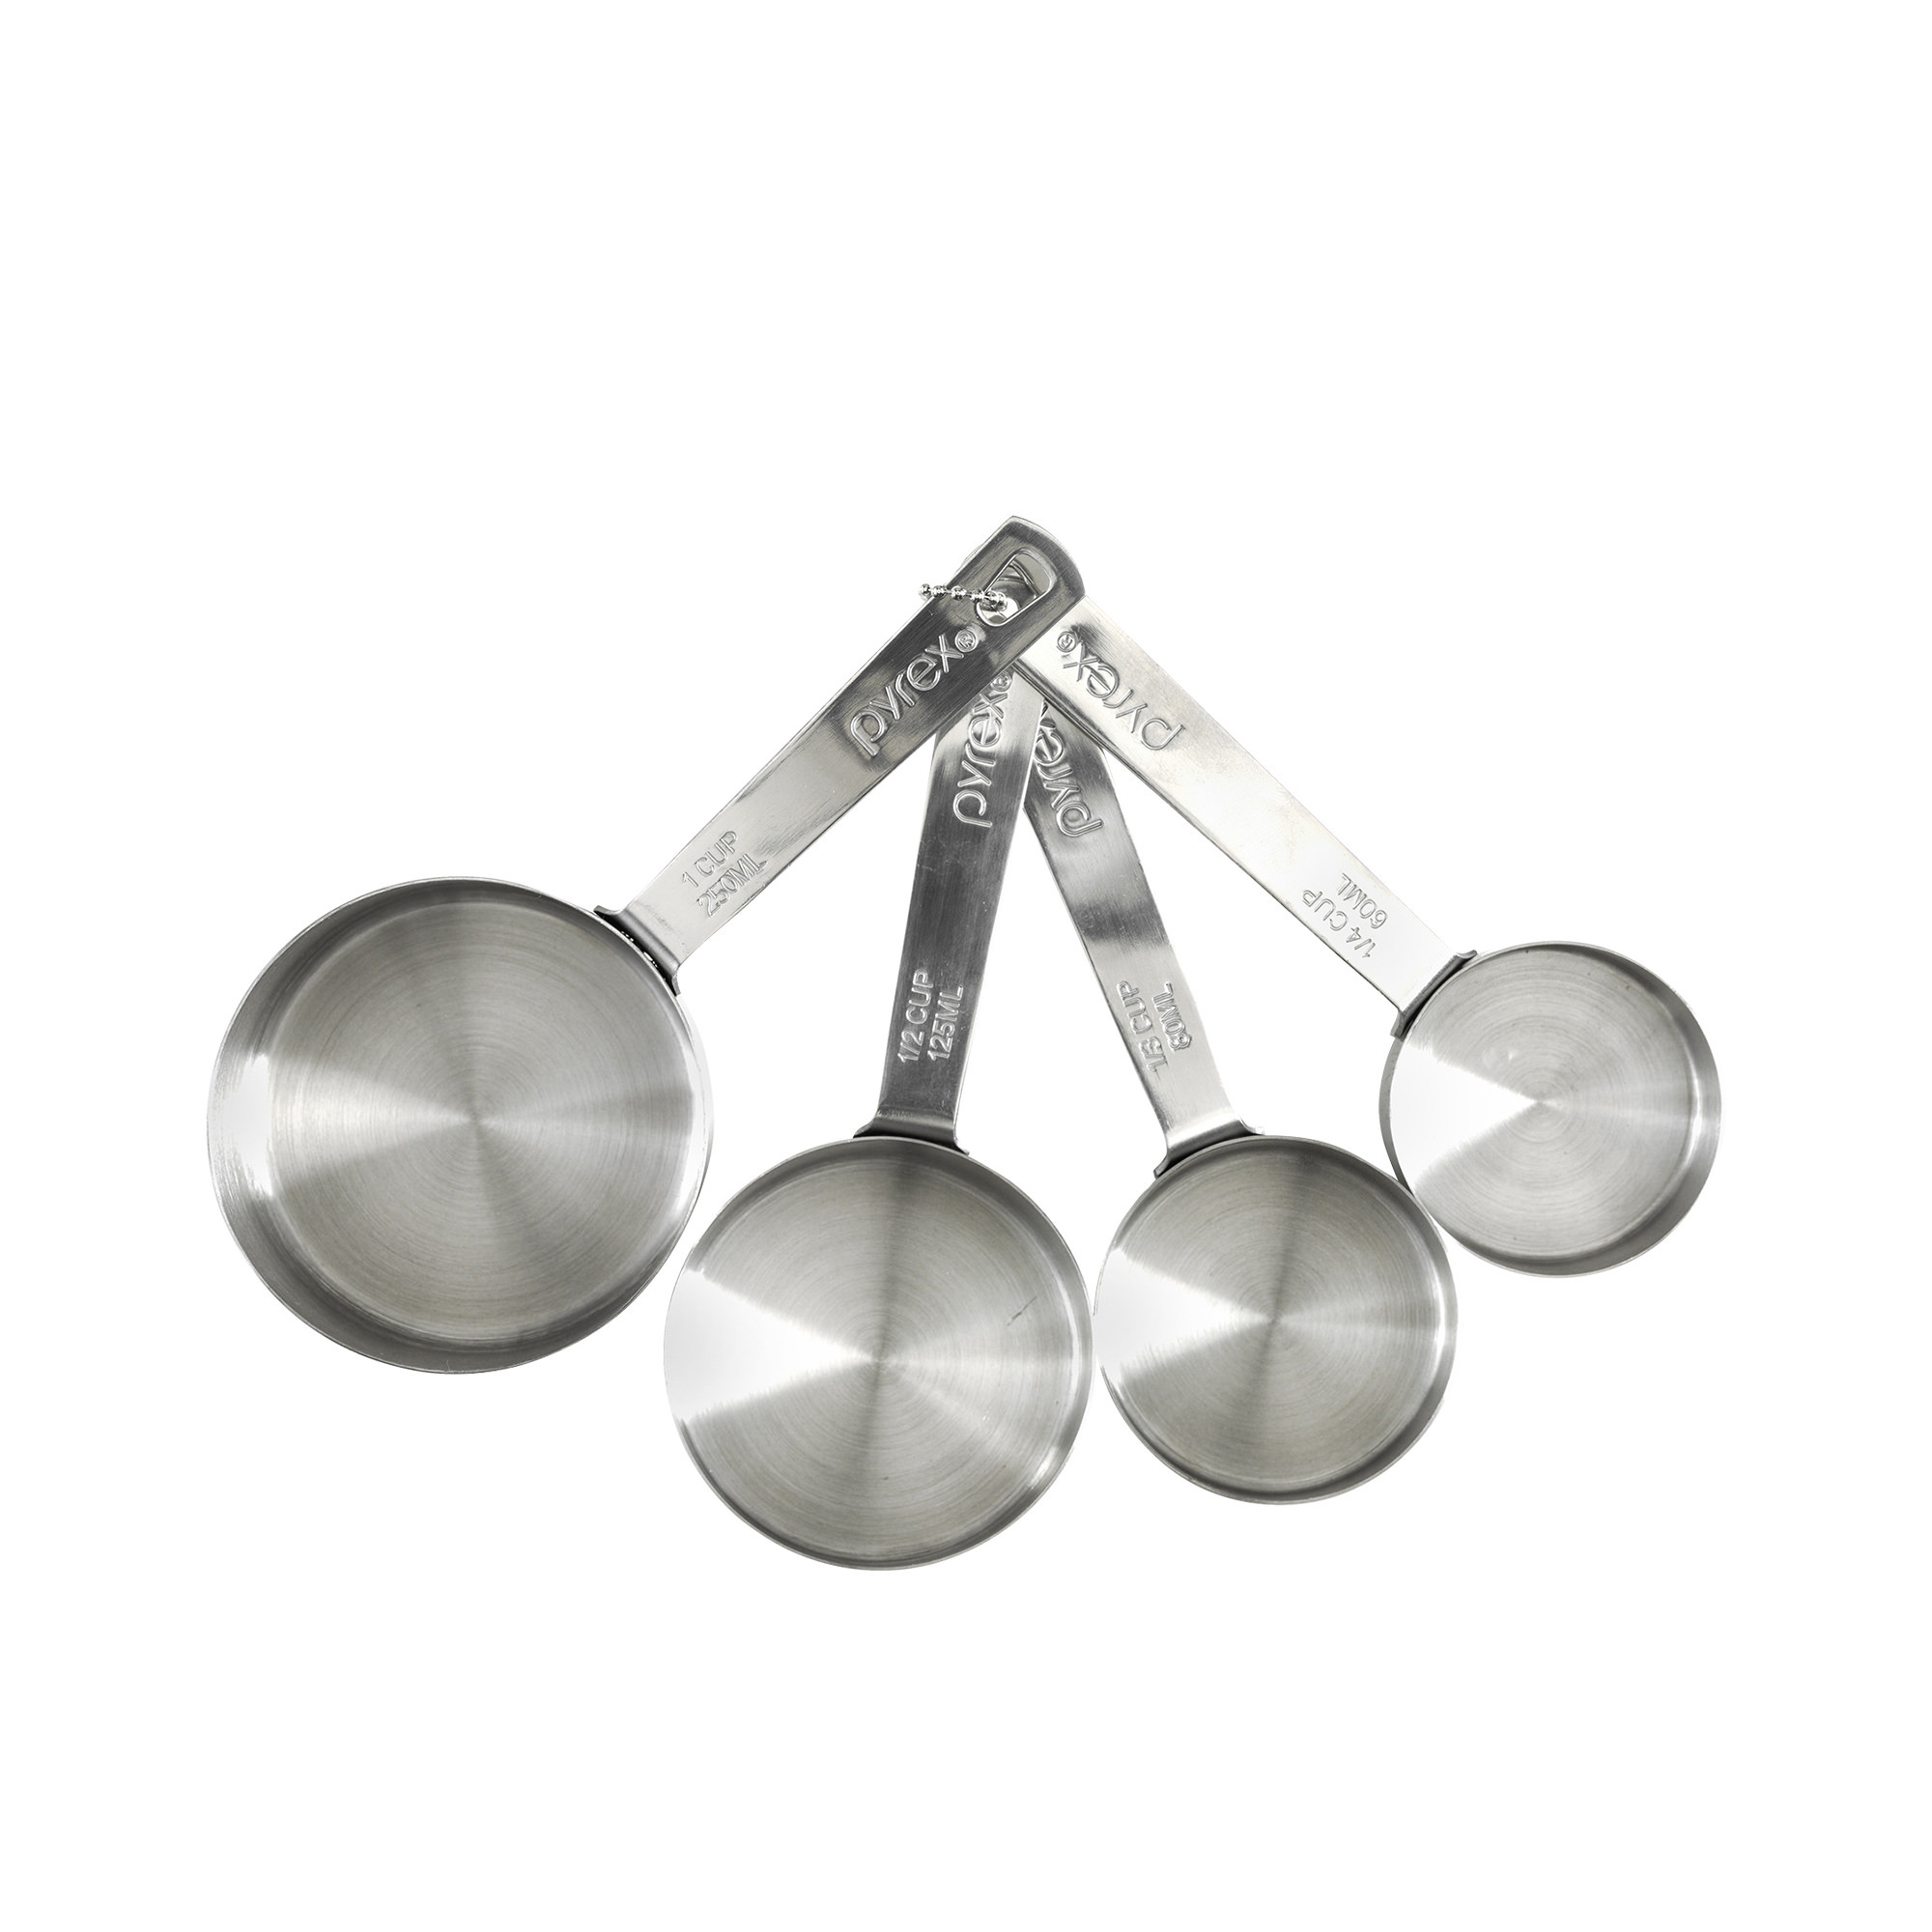 Pyrex Platinum Stainless Steel Measuring Cup Set 4pc Image 1